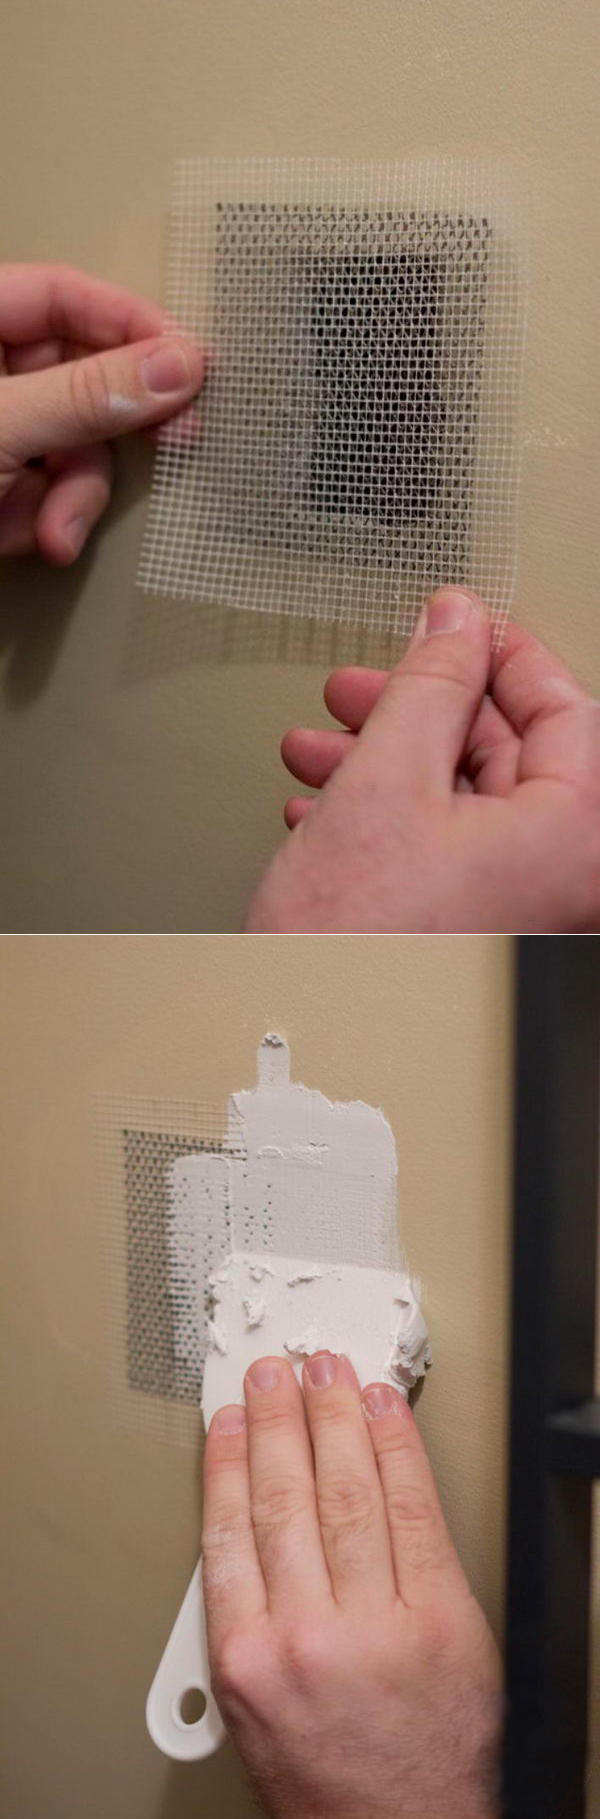 YITAP waterproof plasterboard joint tape repair for holes